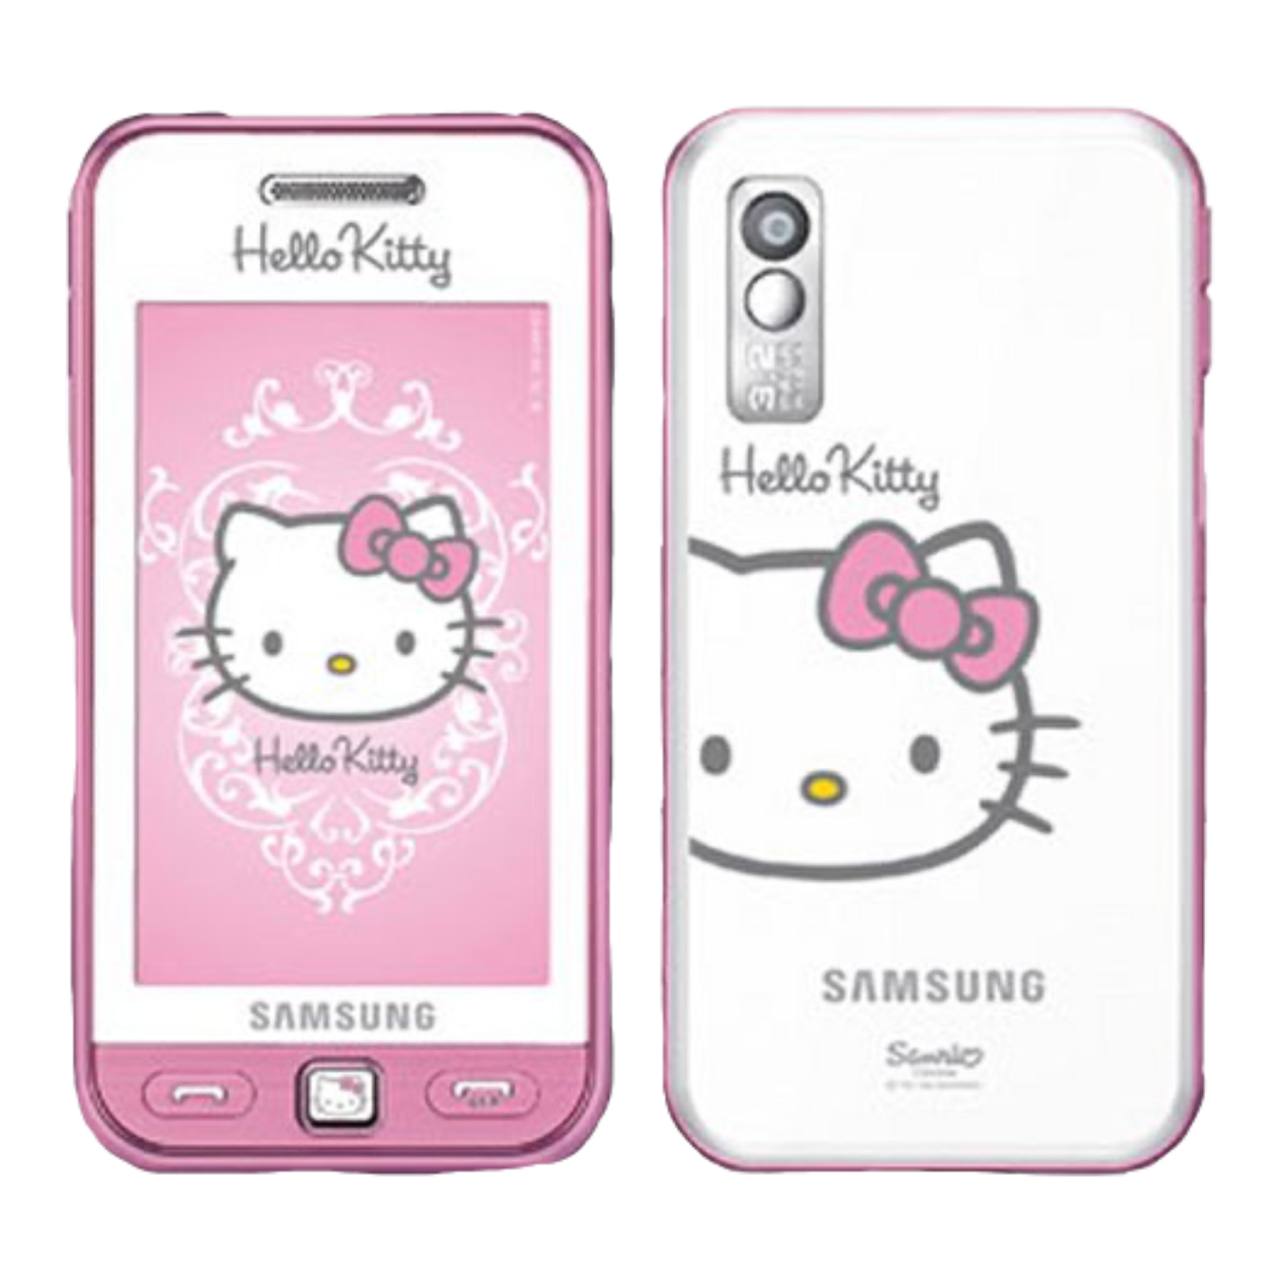 Телефоны для 6 класса. Samsung s5230 hello Kitty. Hello Kitty Samsung с3300. Самсунг Хелло Китти розовый. Hello Kitty Samsung Star s5230.